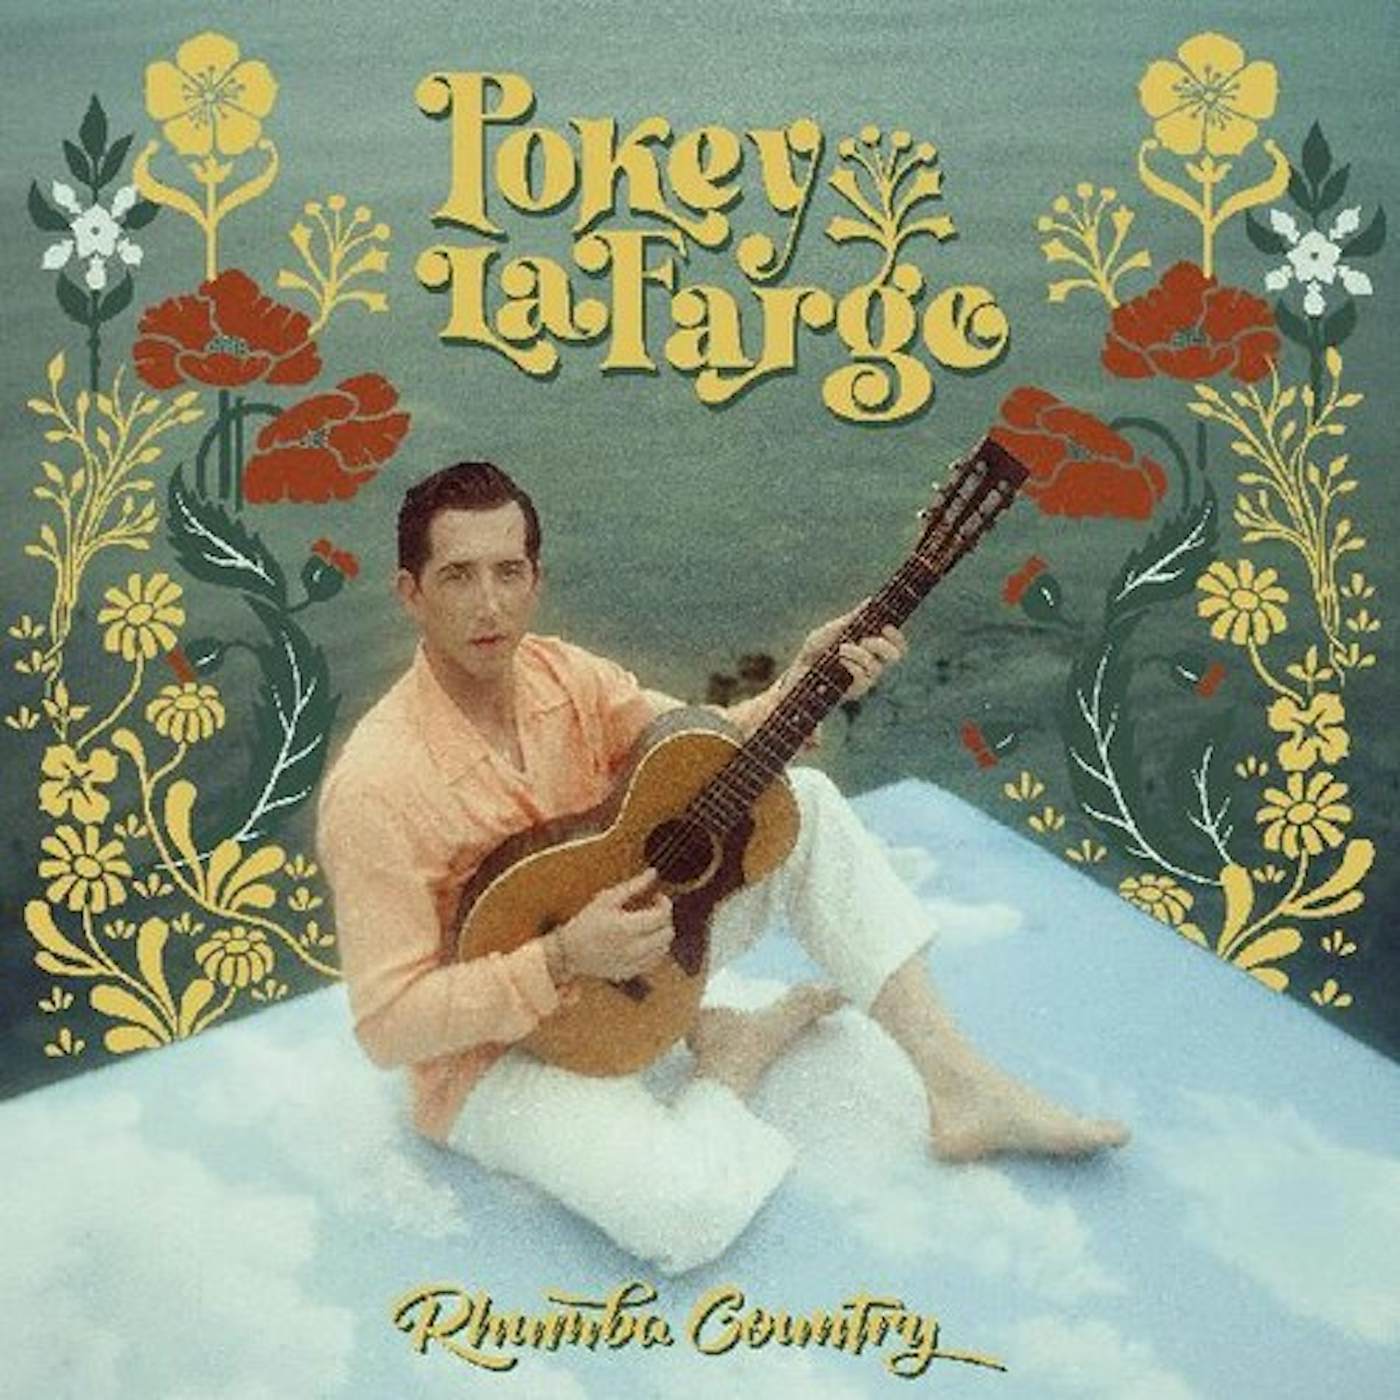 Pokey LaFarge RHUMBA COUNTRY CD